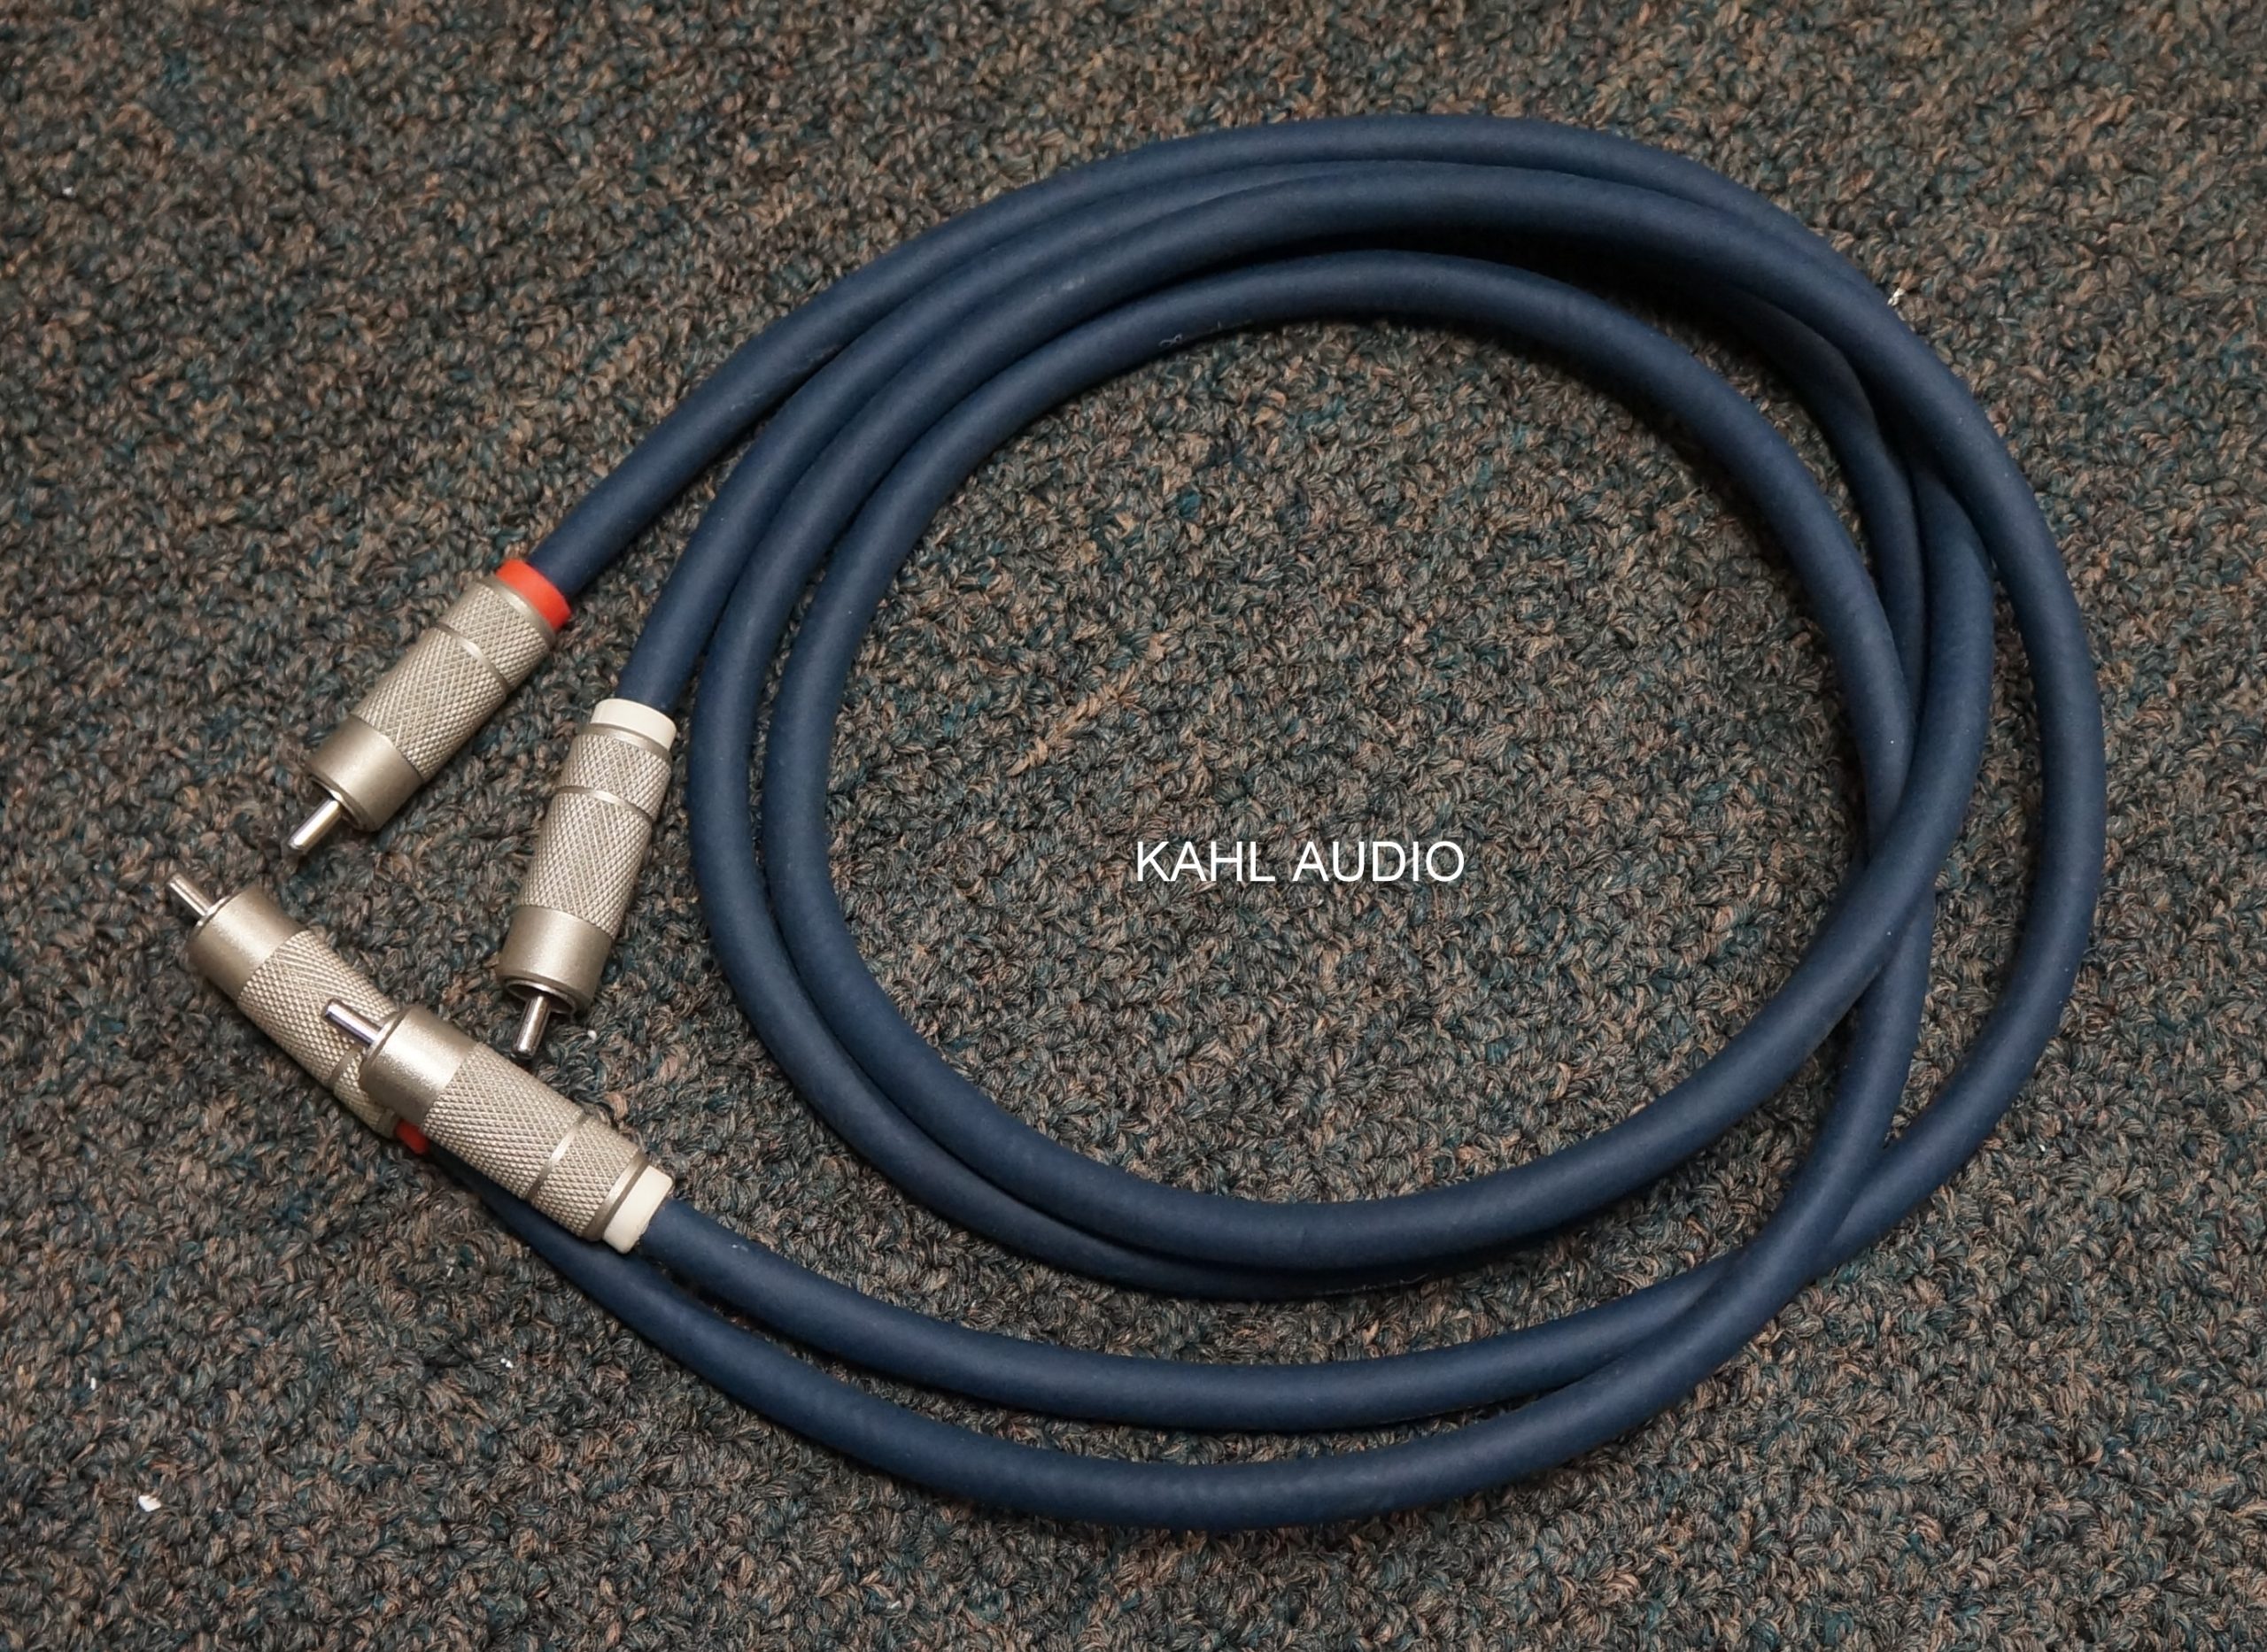 Accuphase L-10 interconnect cables, 1m RCA pr. Positive reviews. $250 MSRP.